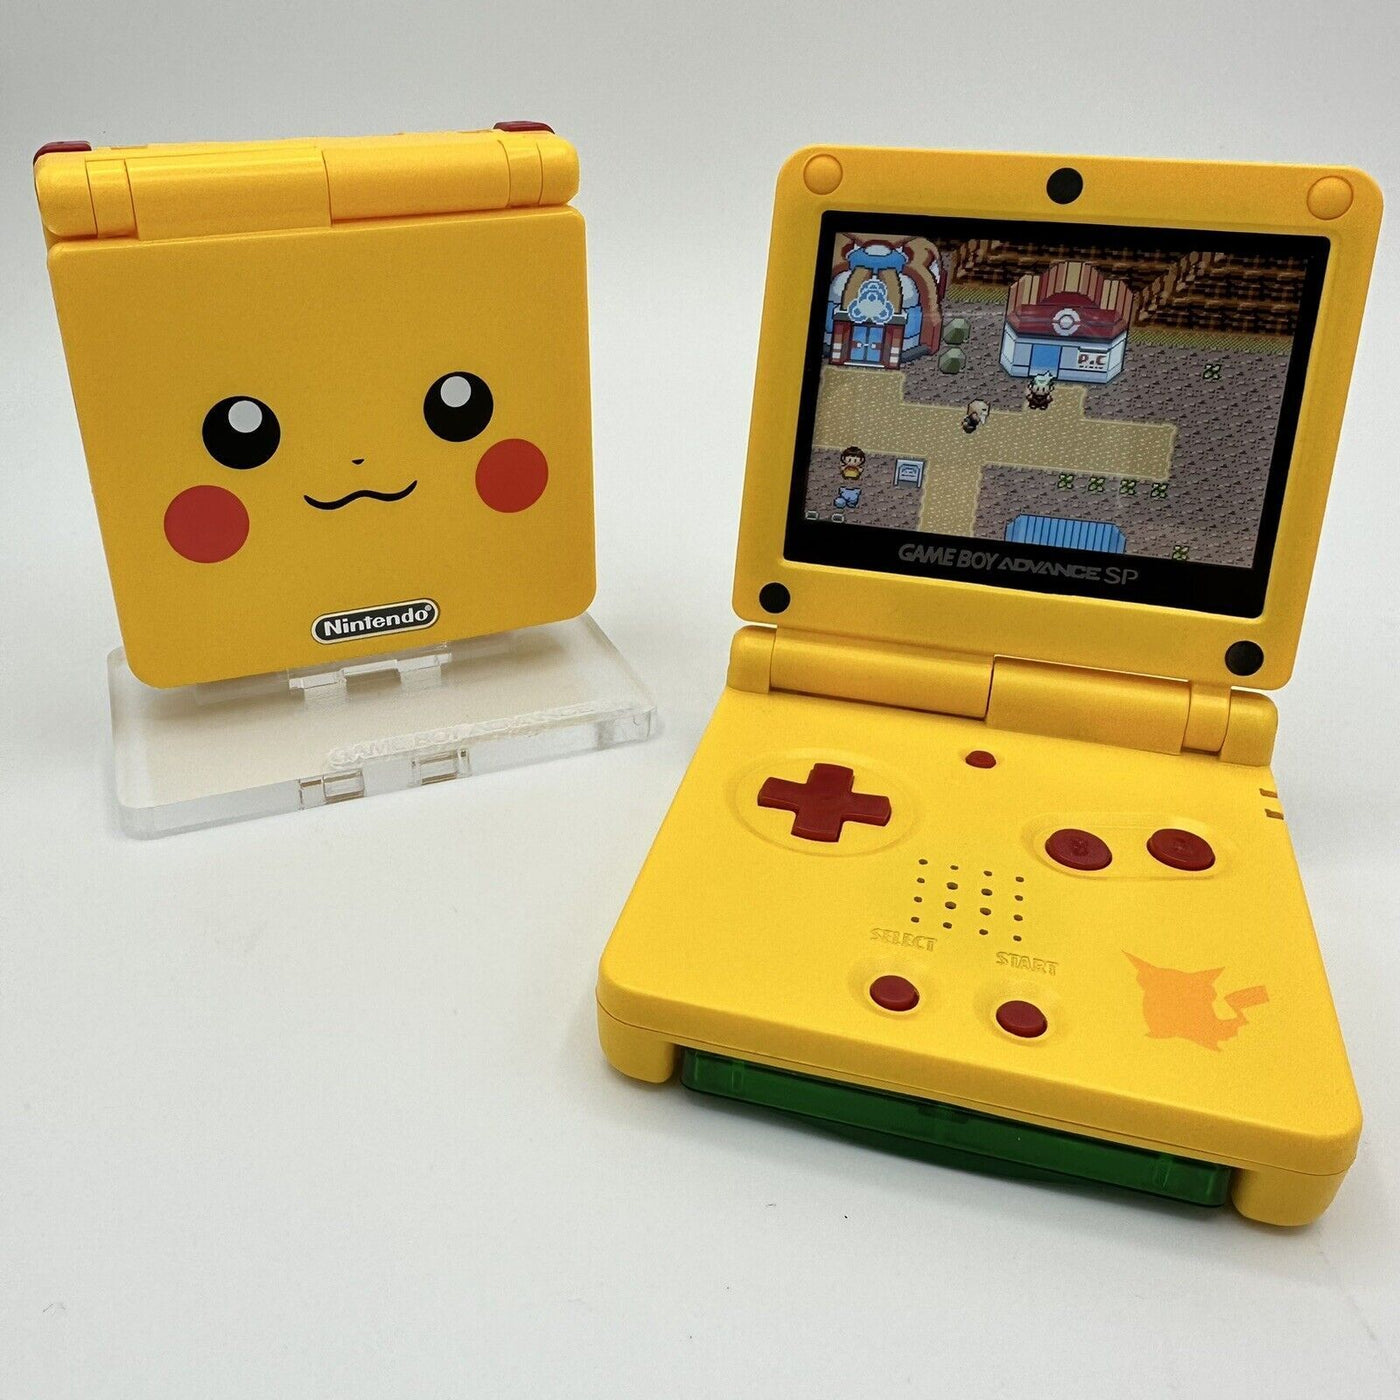 Game Boy Advance SP Console - Pikachu Edition